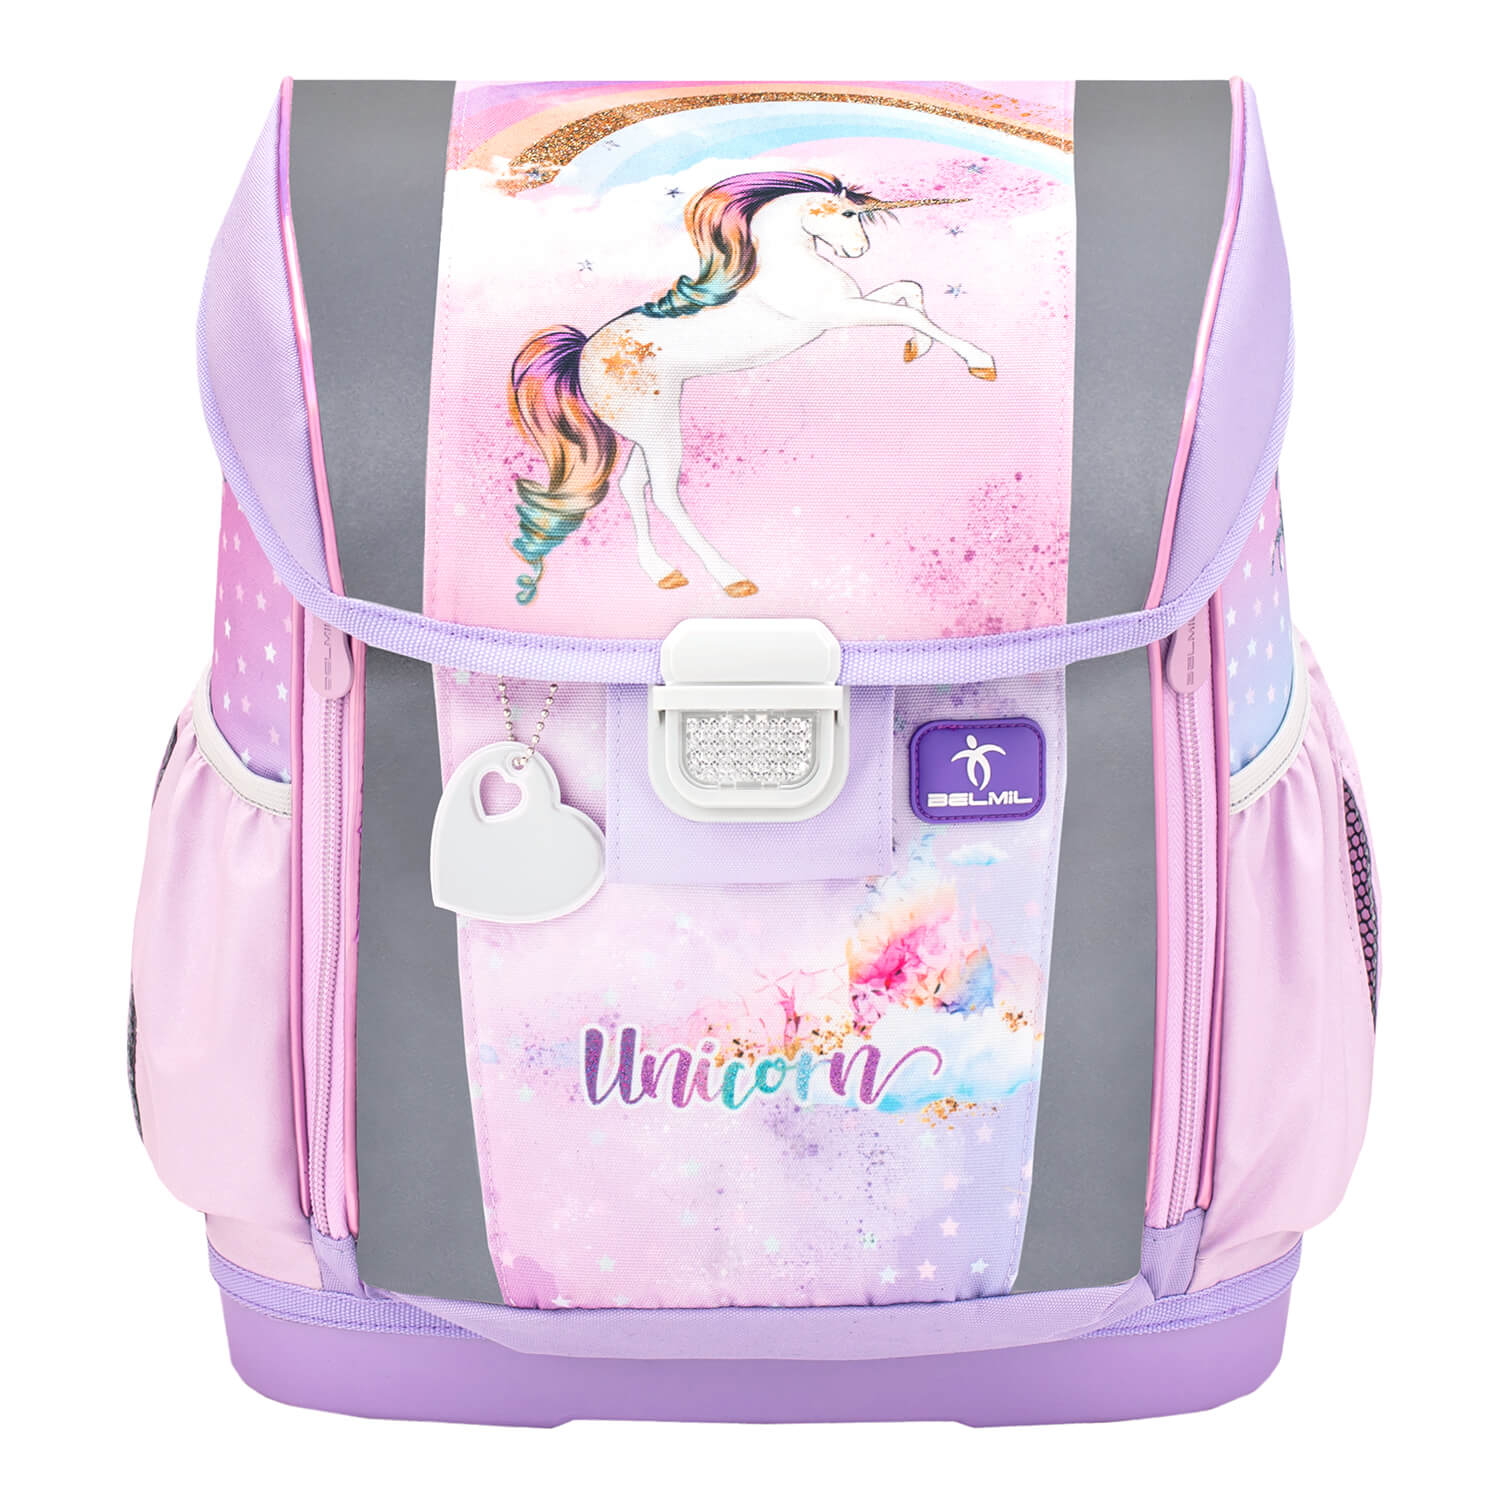 Customize Me Rainbow Unicorn schoolbag set 5 pcs with GRATIS keychain